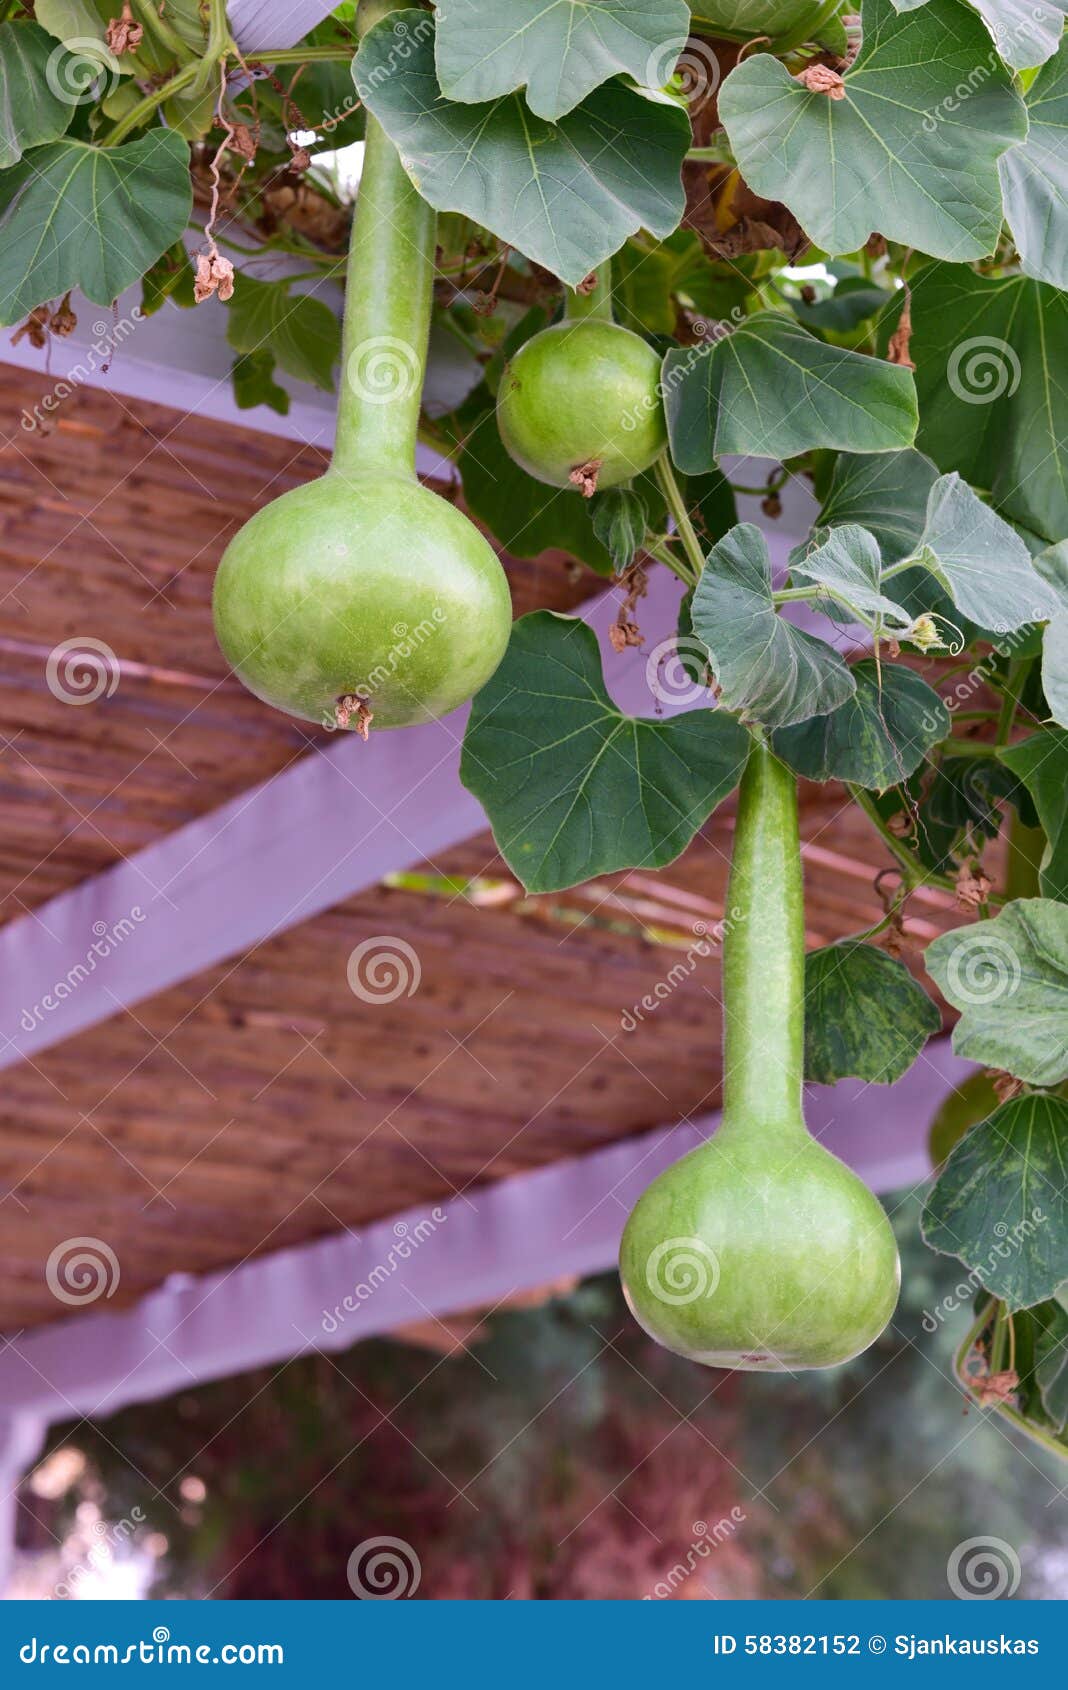 calabash gourd plant fruits